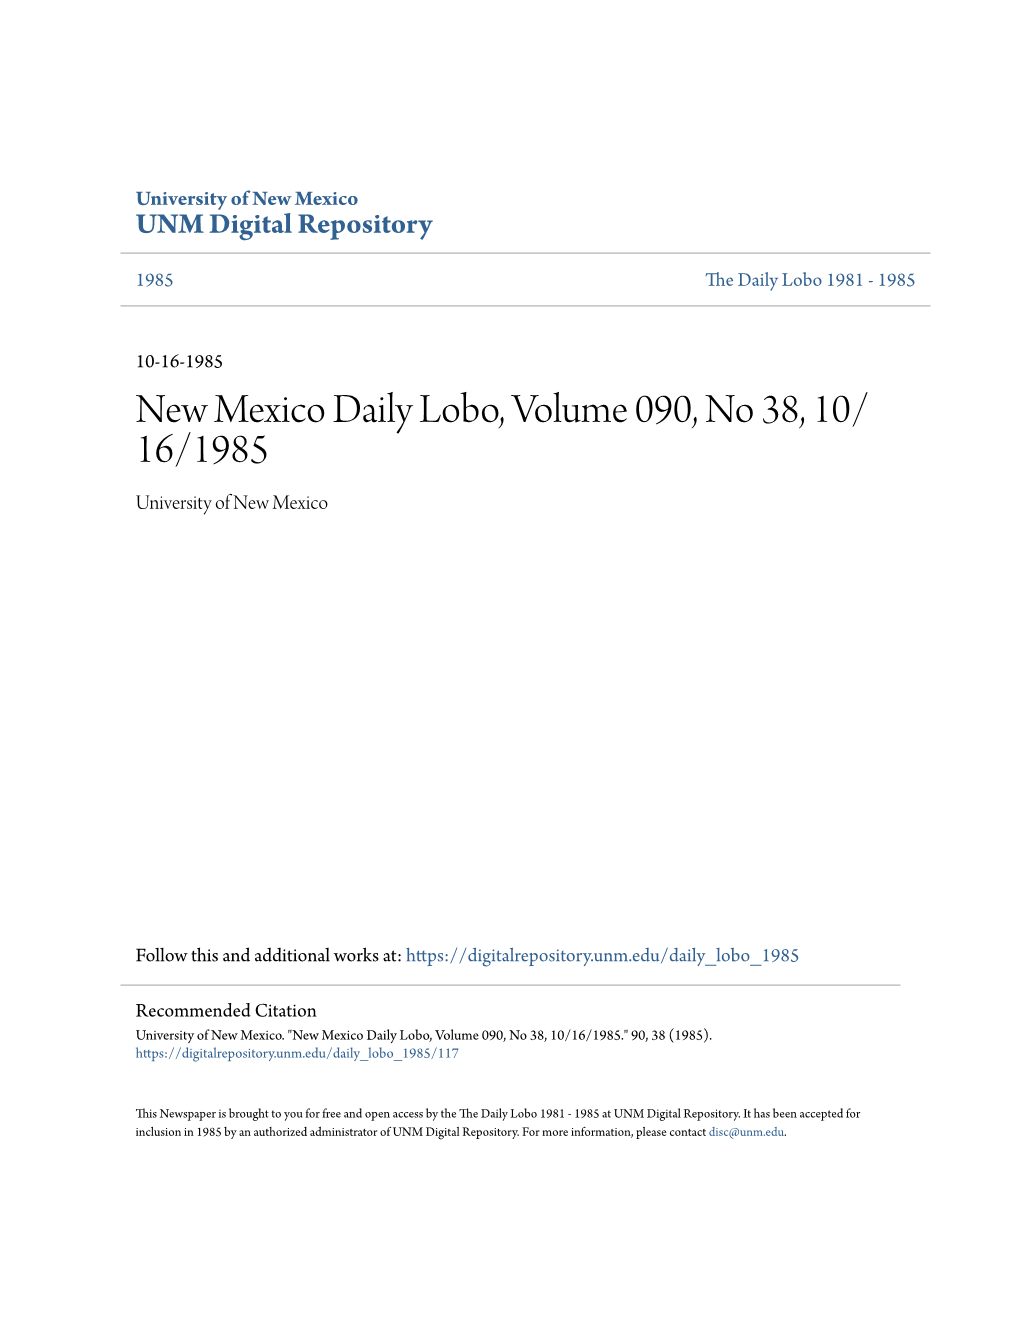 New Mexico Daily Lobo, Volume 090, No 38, 10/16/1985." 90, 38 (1985)